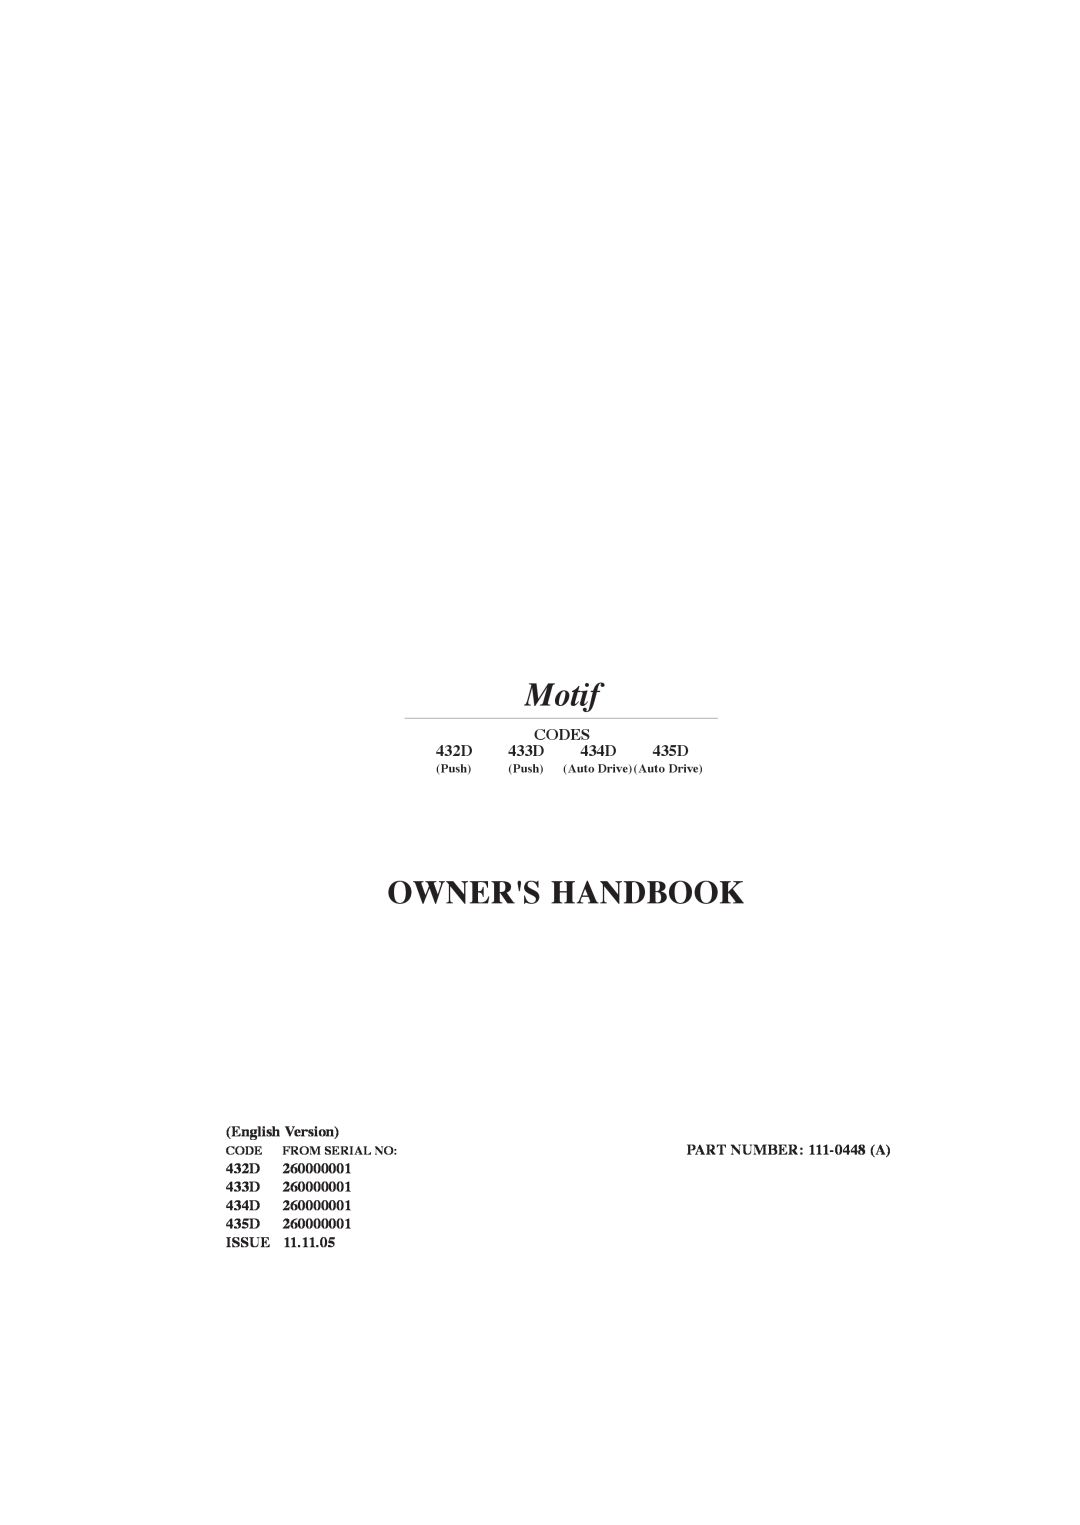 Hayter Mowers 434D manual Codes, 432D, 433D, 435D, Motif, Owners Handbook 